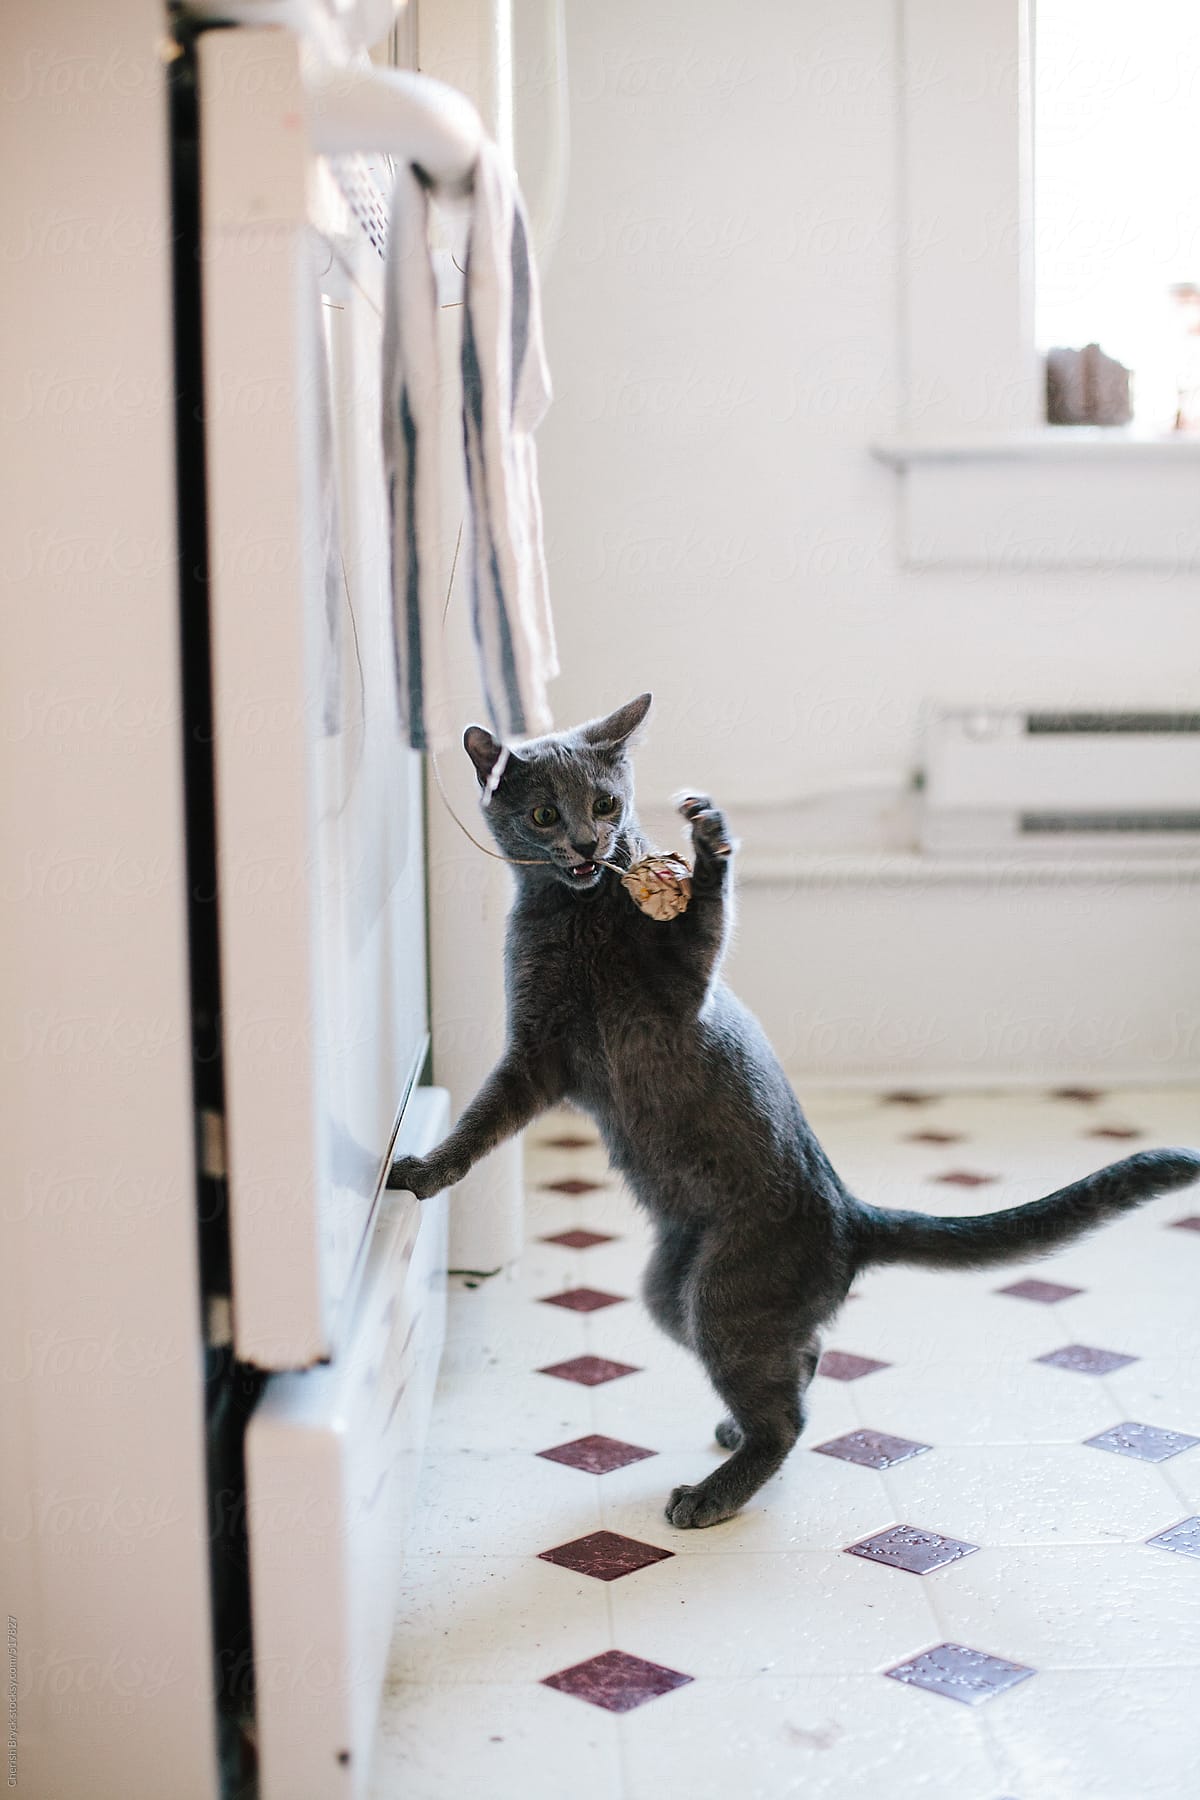 Playful kitten in the kitchen.